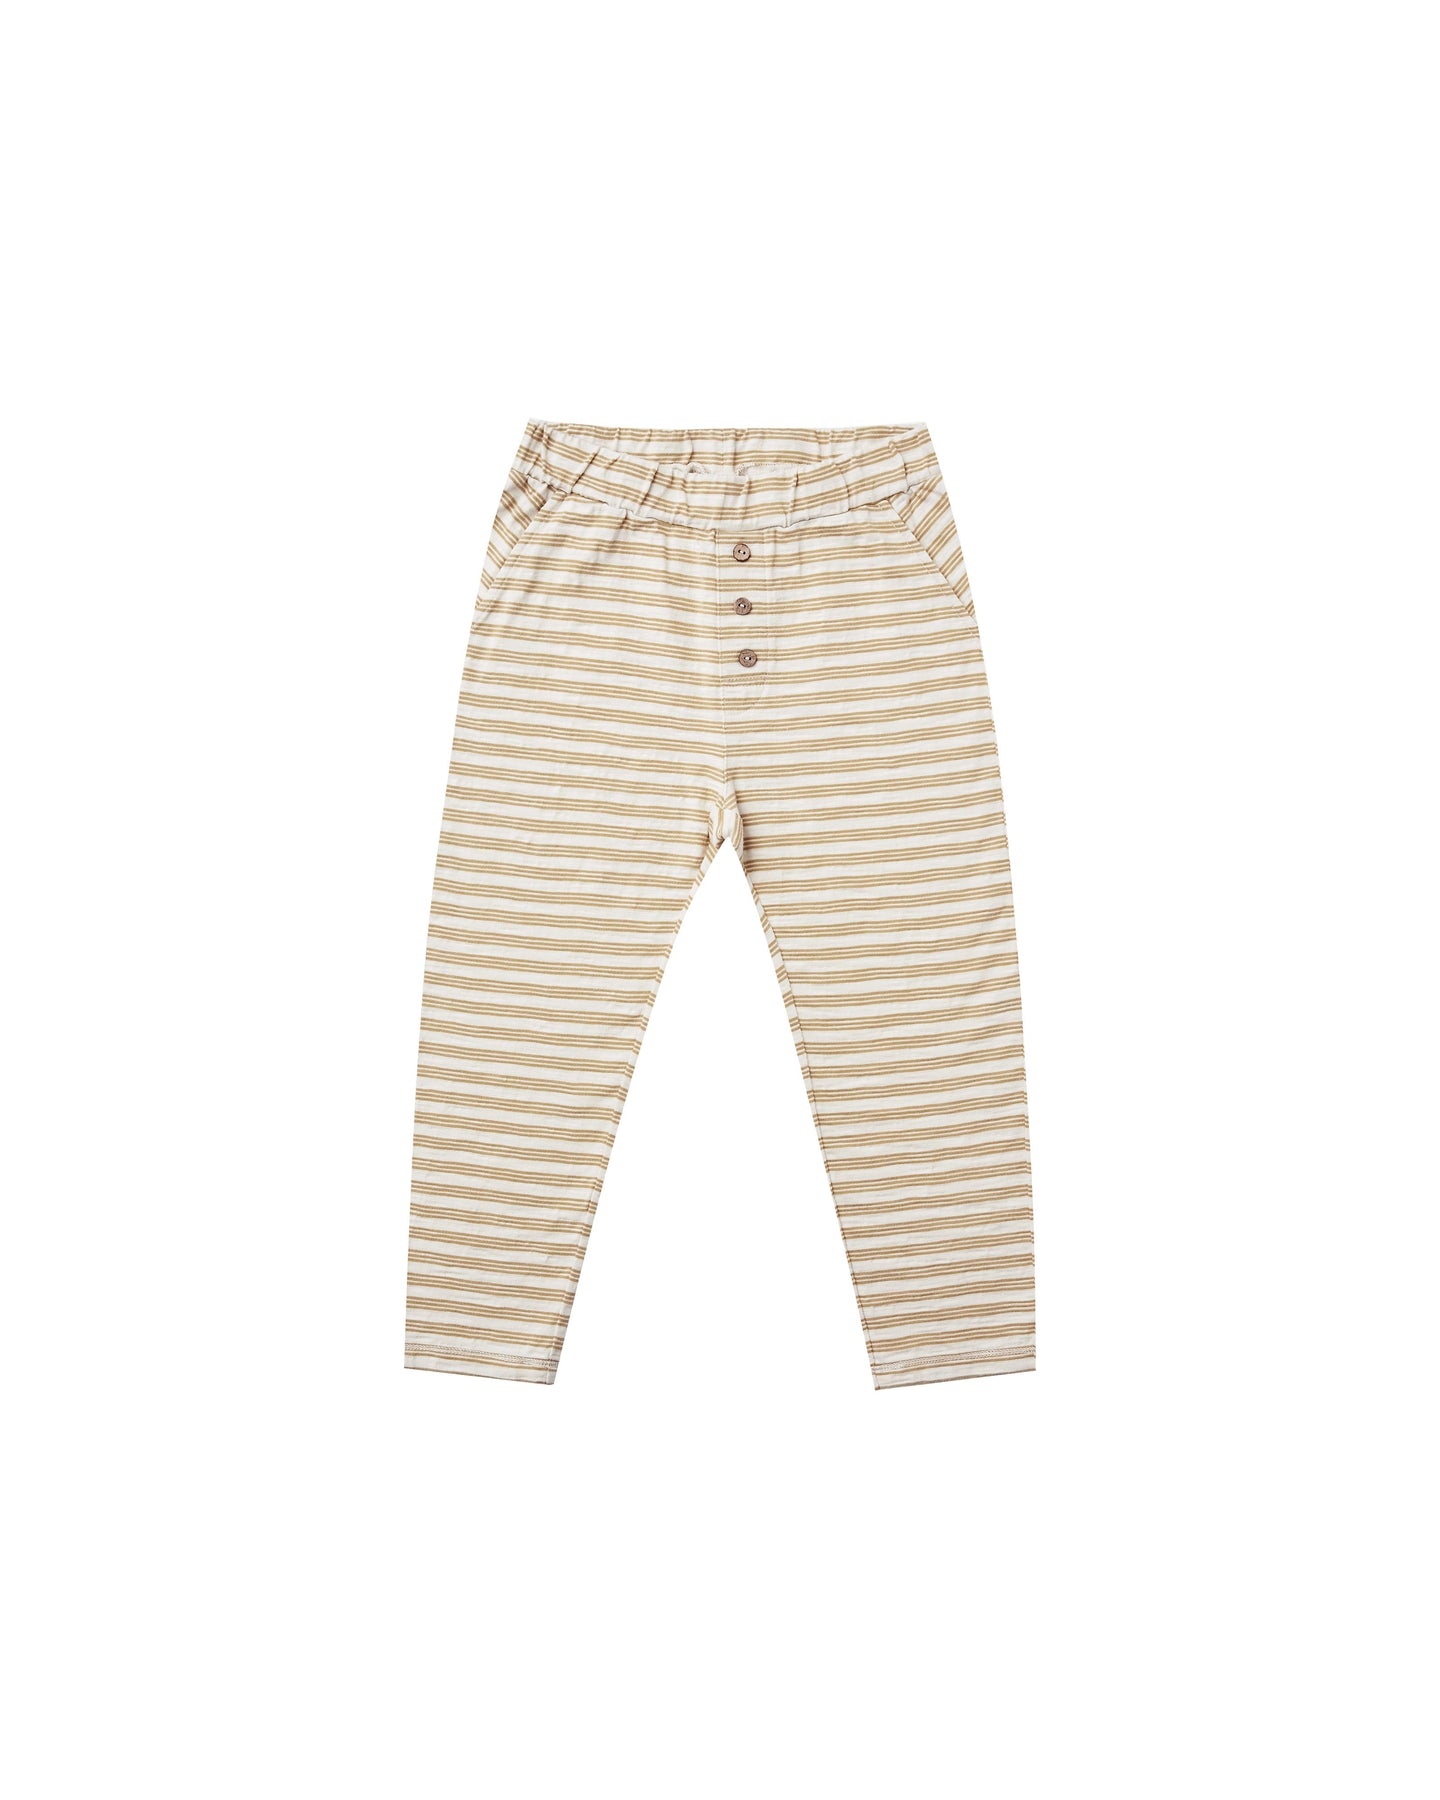 Rylee + Cru - Gold Stripe Cru Pant - Ivory